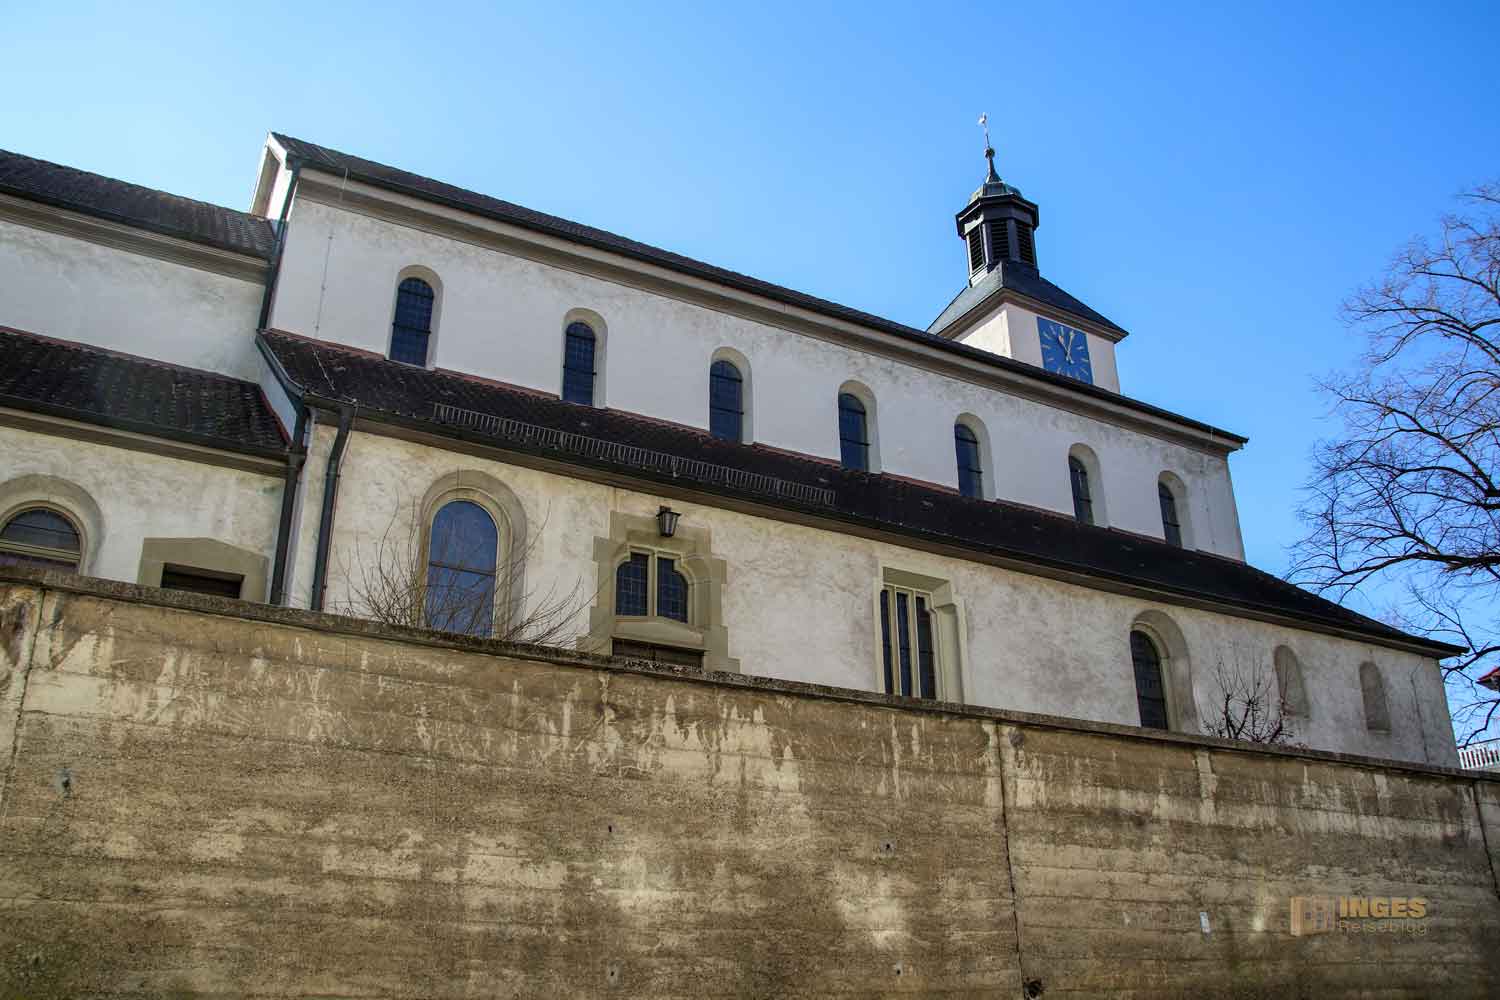 Stiftskirche St. Cyriakus Bad Boll 1450